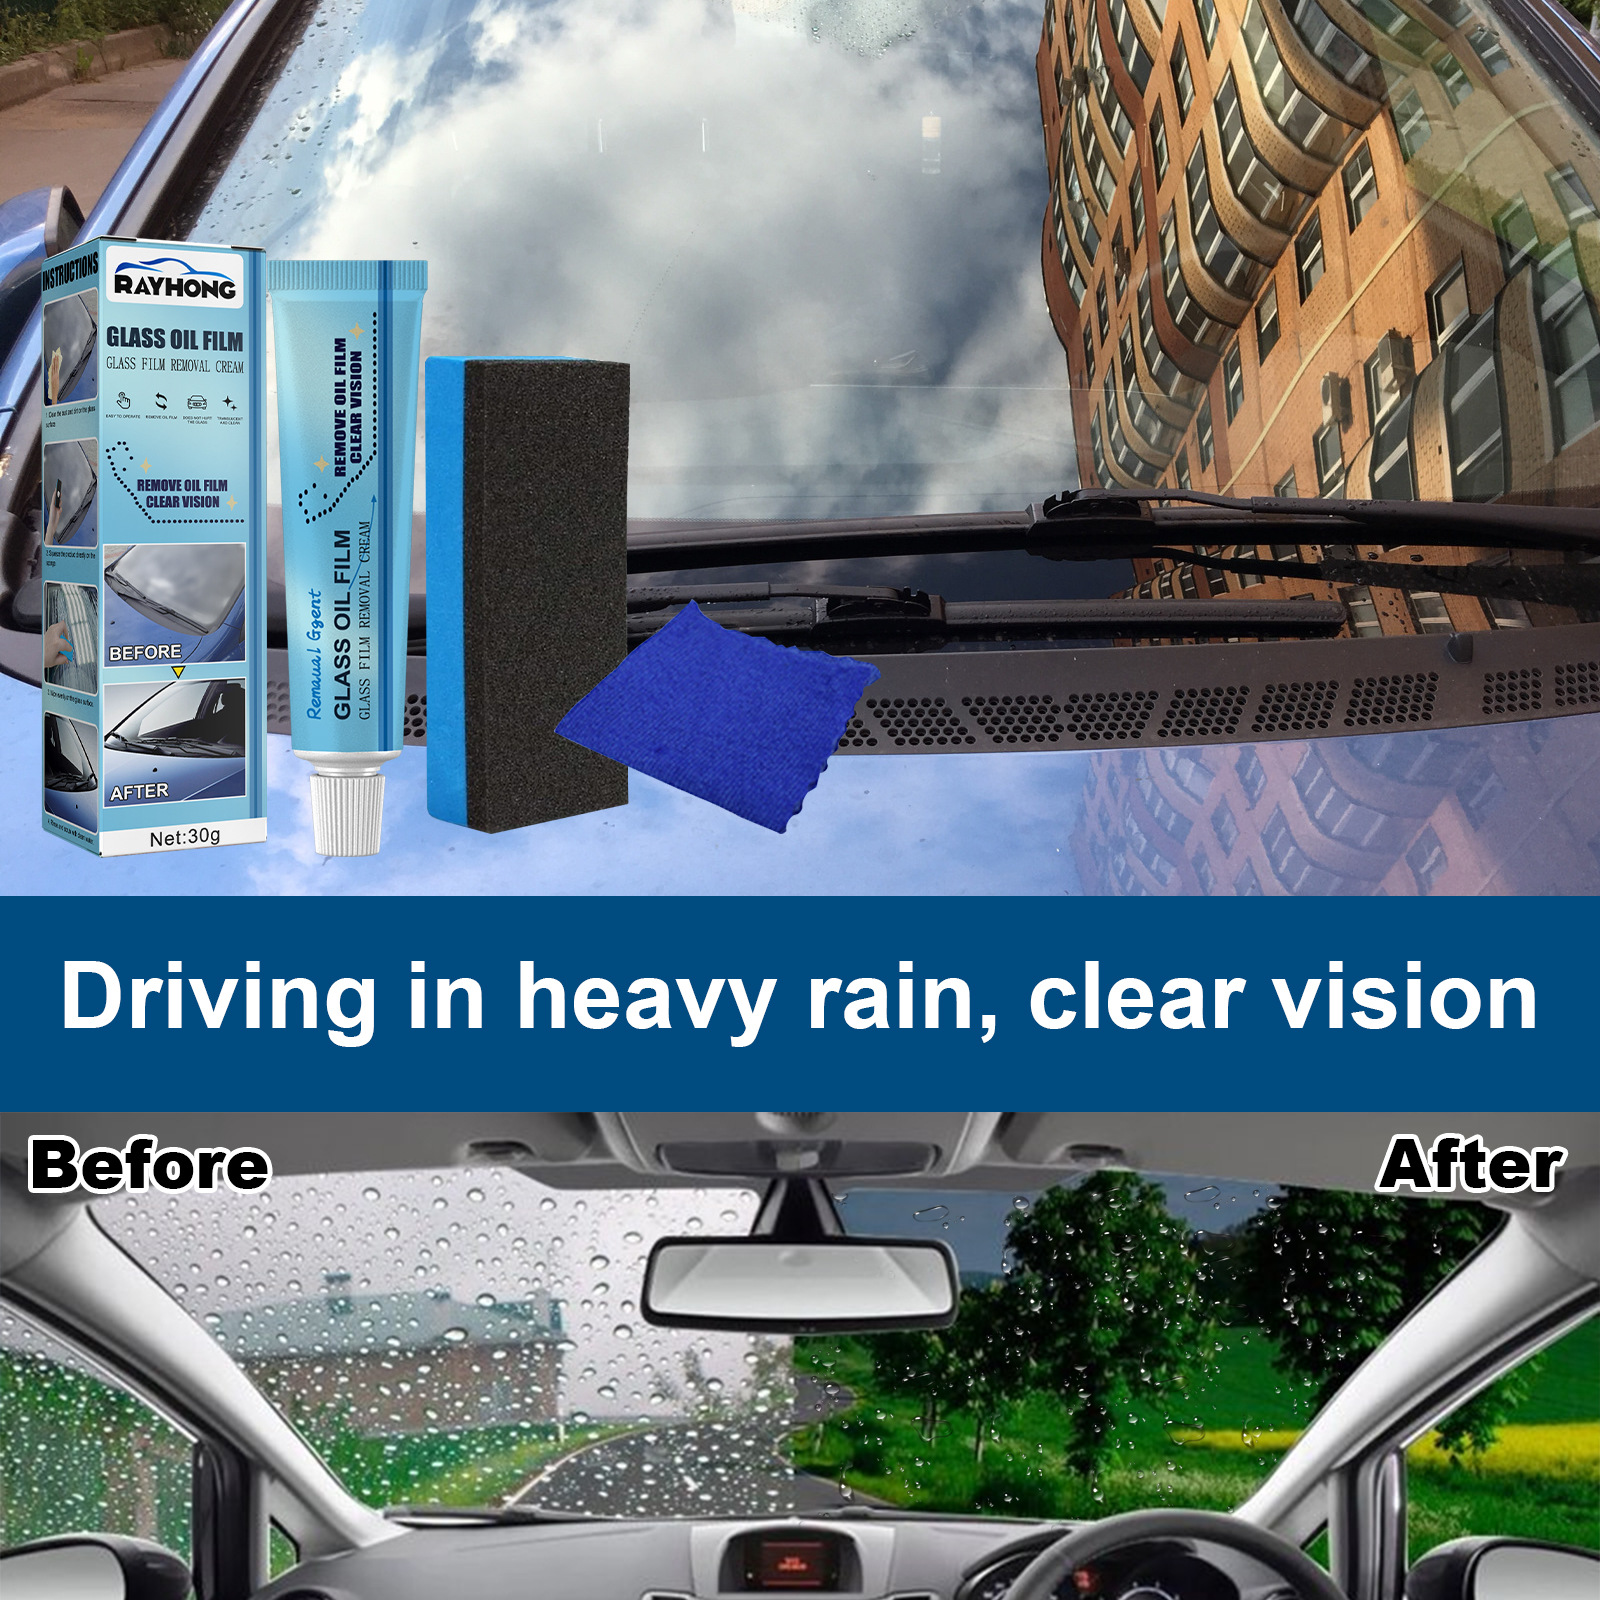 Rayhong 玻璃油膜去除剂 去污防雨去除油膜净汽车前挡风玻璃车窗详情图2